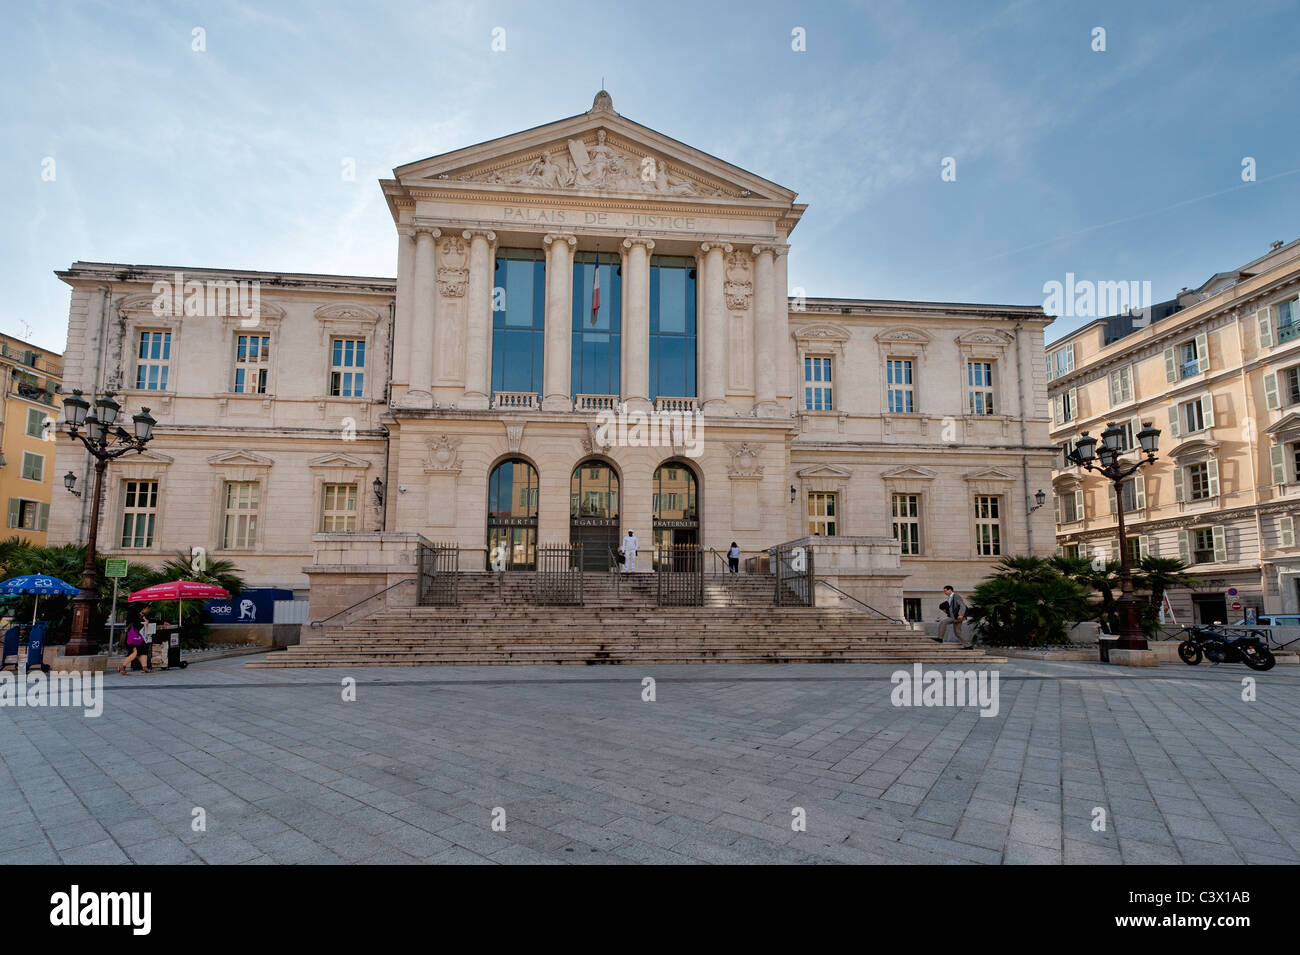 The Palais-de-Justice in the Place du Palais, Nice Stock Photo